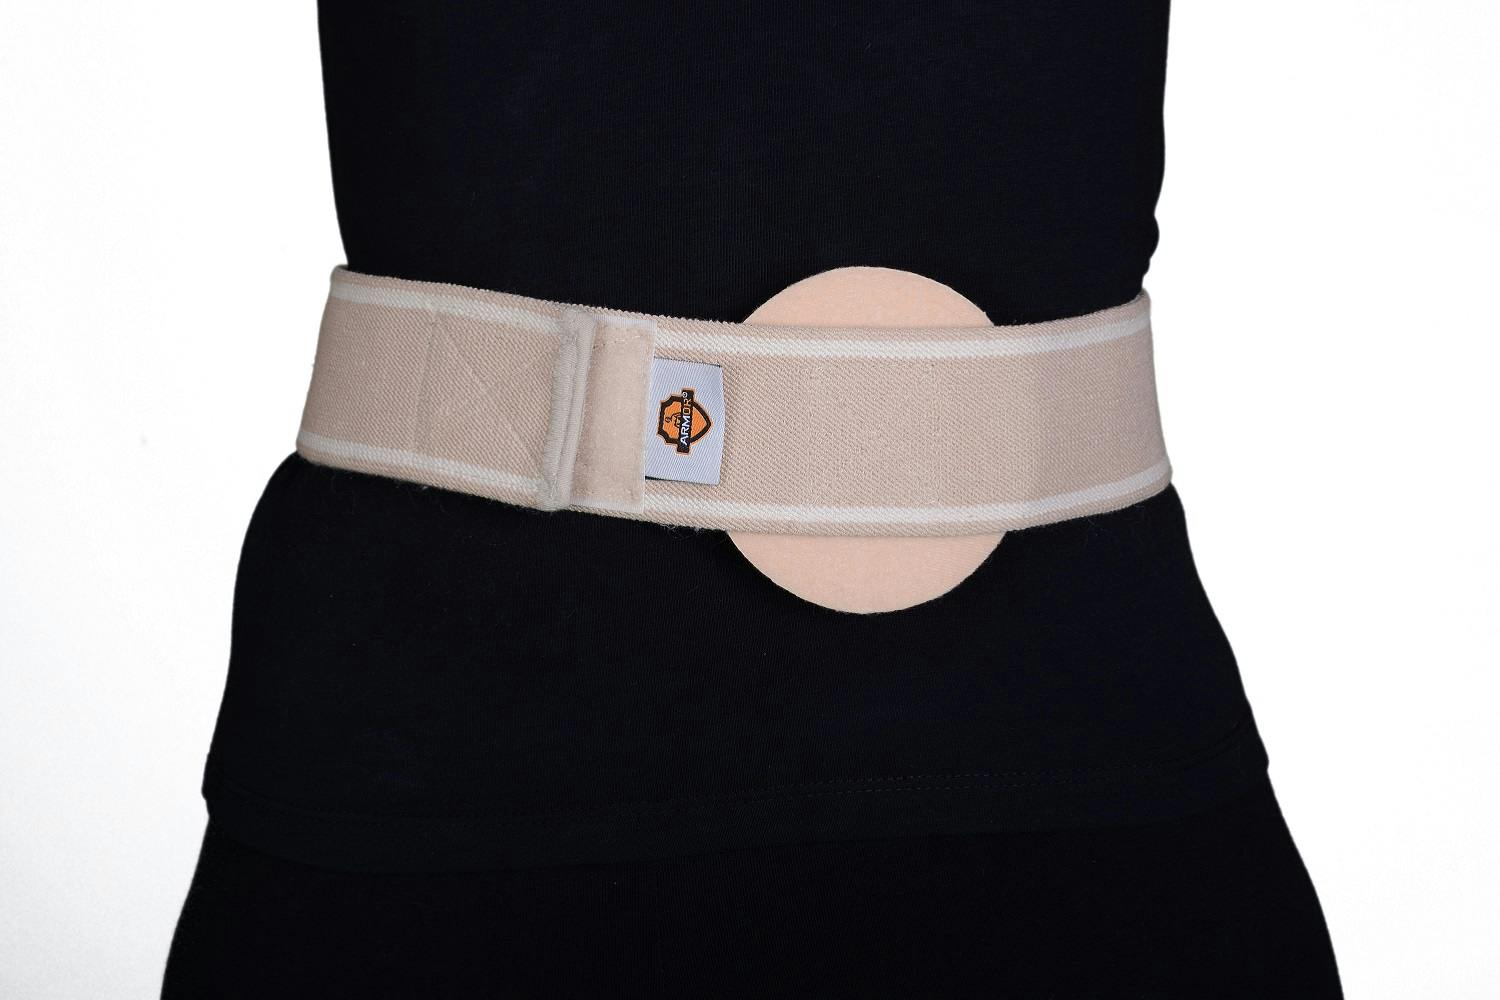 Hemmka Health ARC422S-os Umbilical Hernia Belt Adult 6cm High One Size Fits All